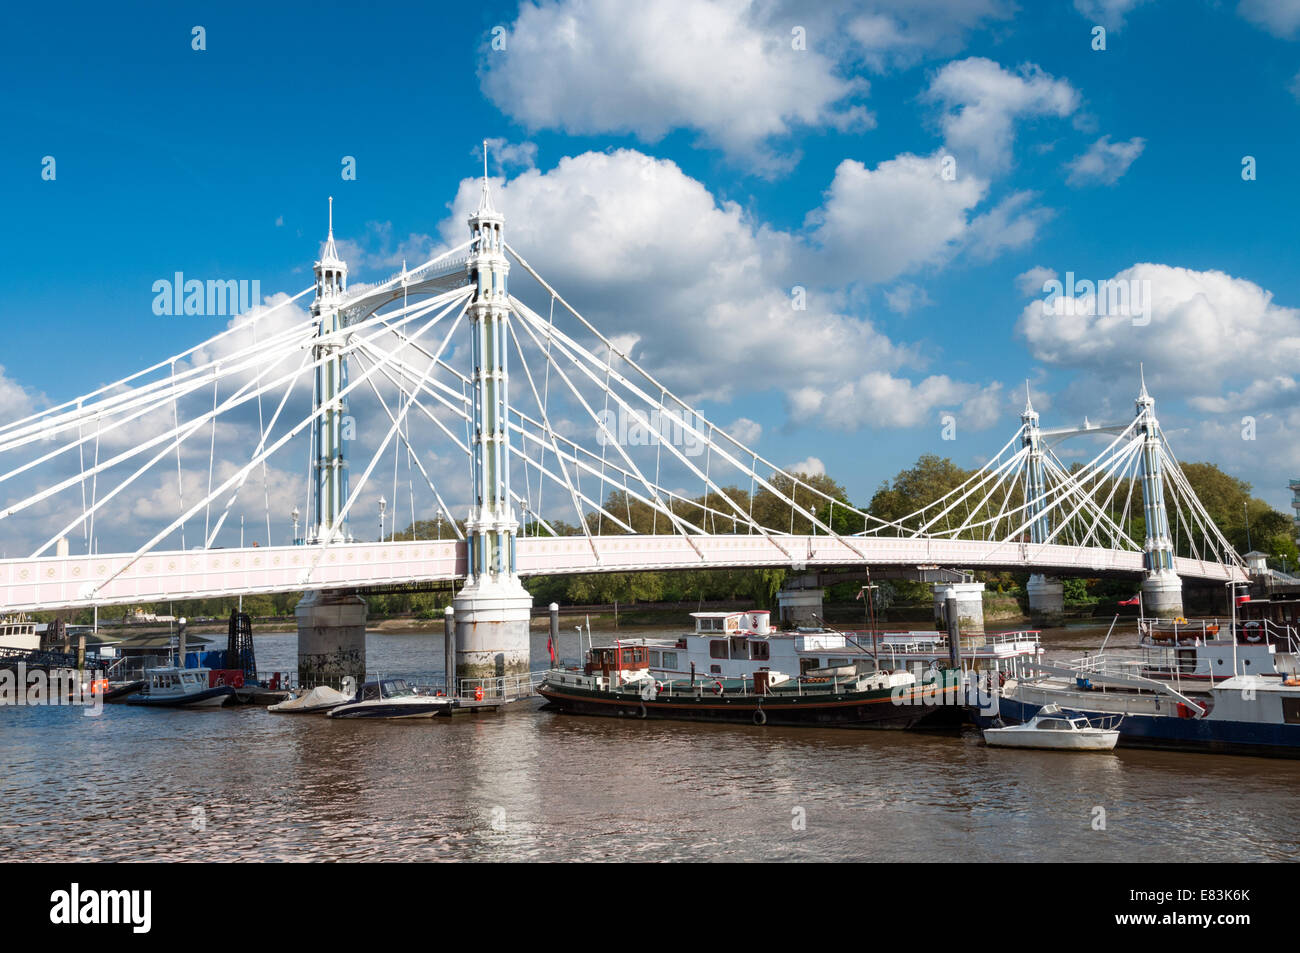 Albert Bridge, London, England, UK Banque D'Images